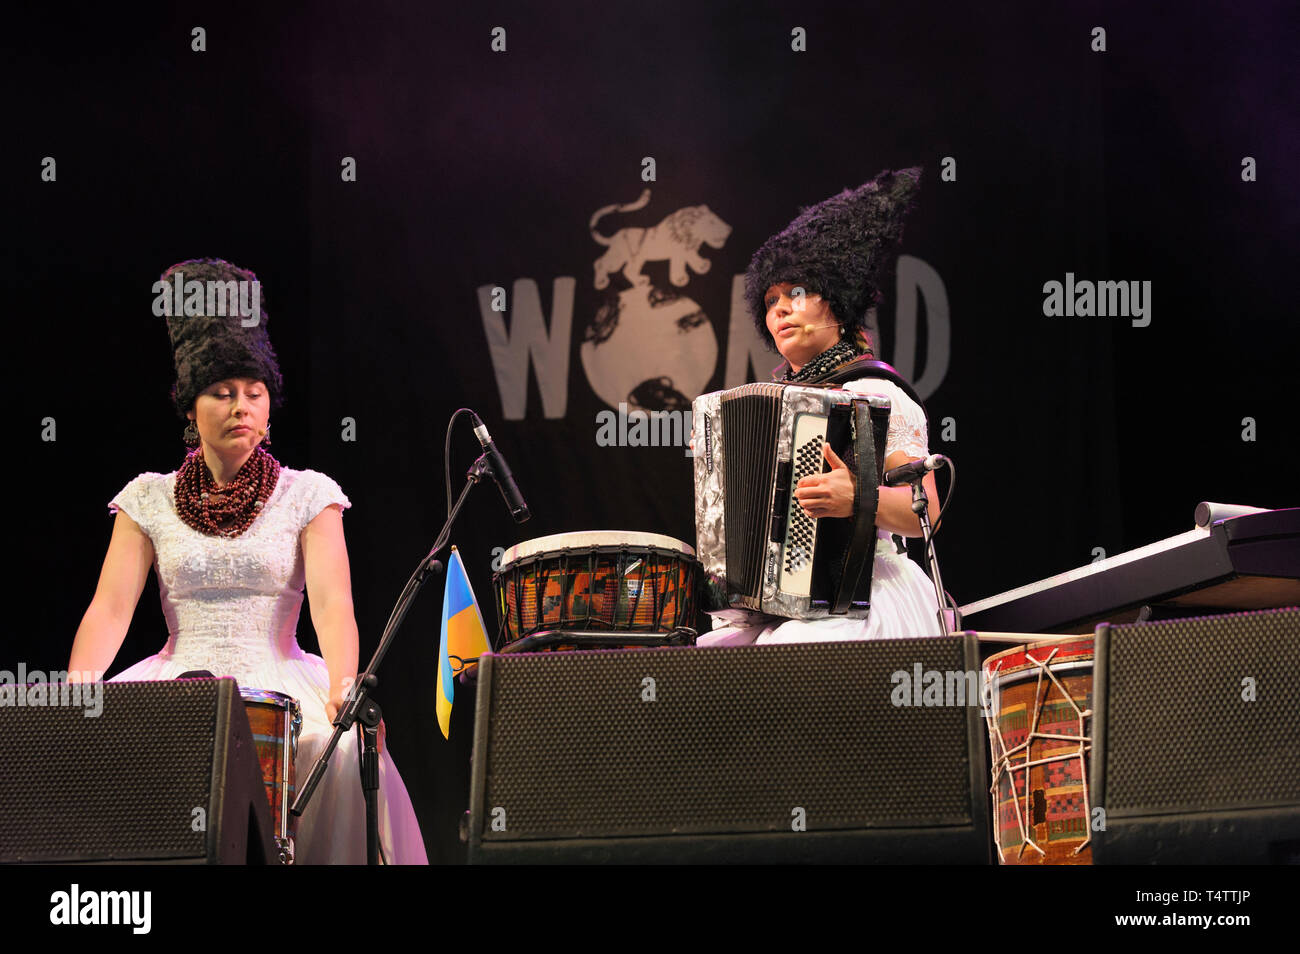 Olena Tsibulska and Iryna Kovalenko performing with Ukrainian band, Dakha Brakha at the Womad Festival, Charlton Park, UK, July 27, 2014. Stock Photo